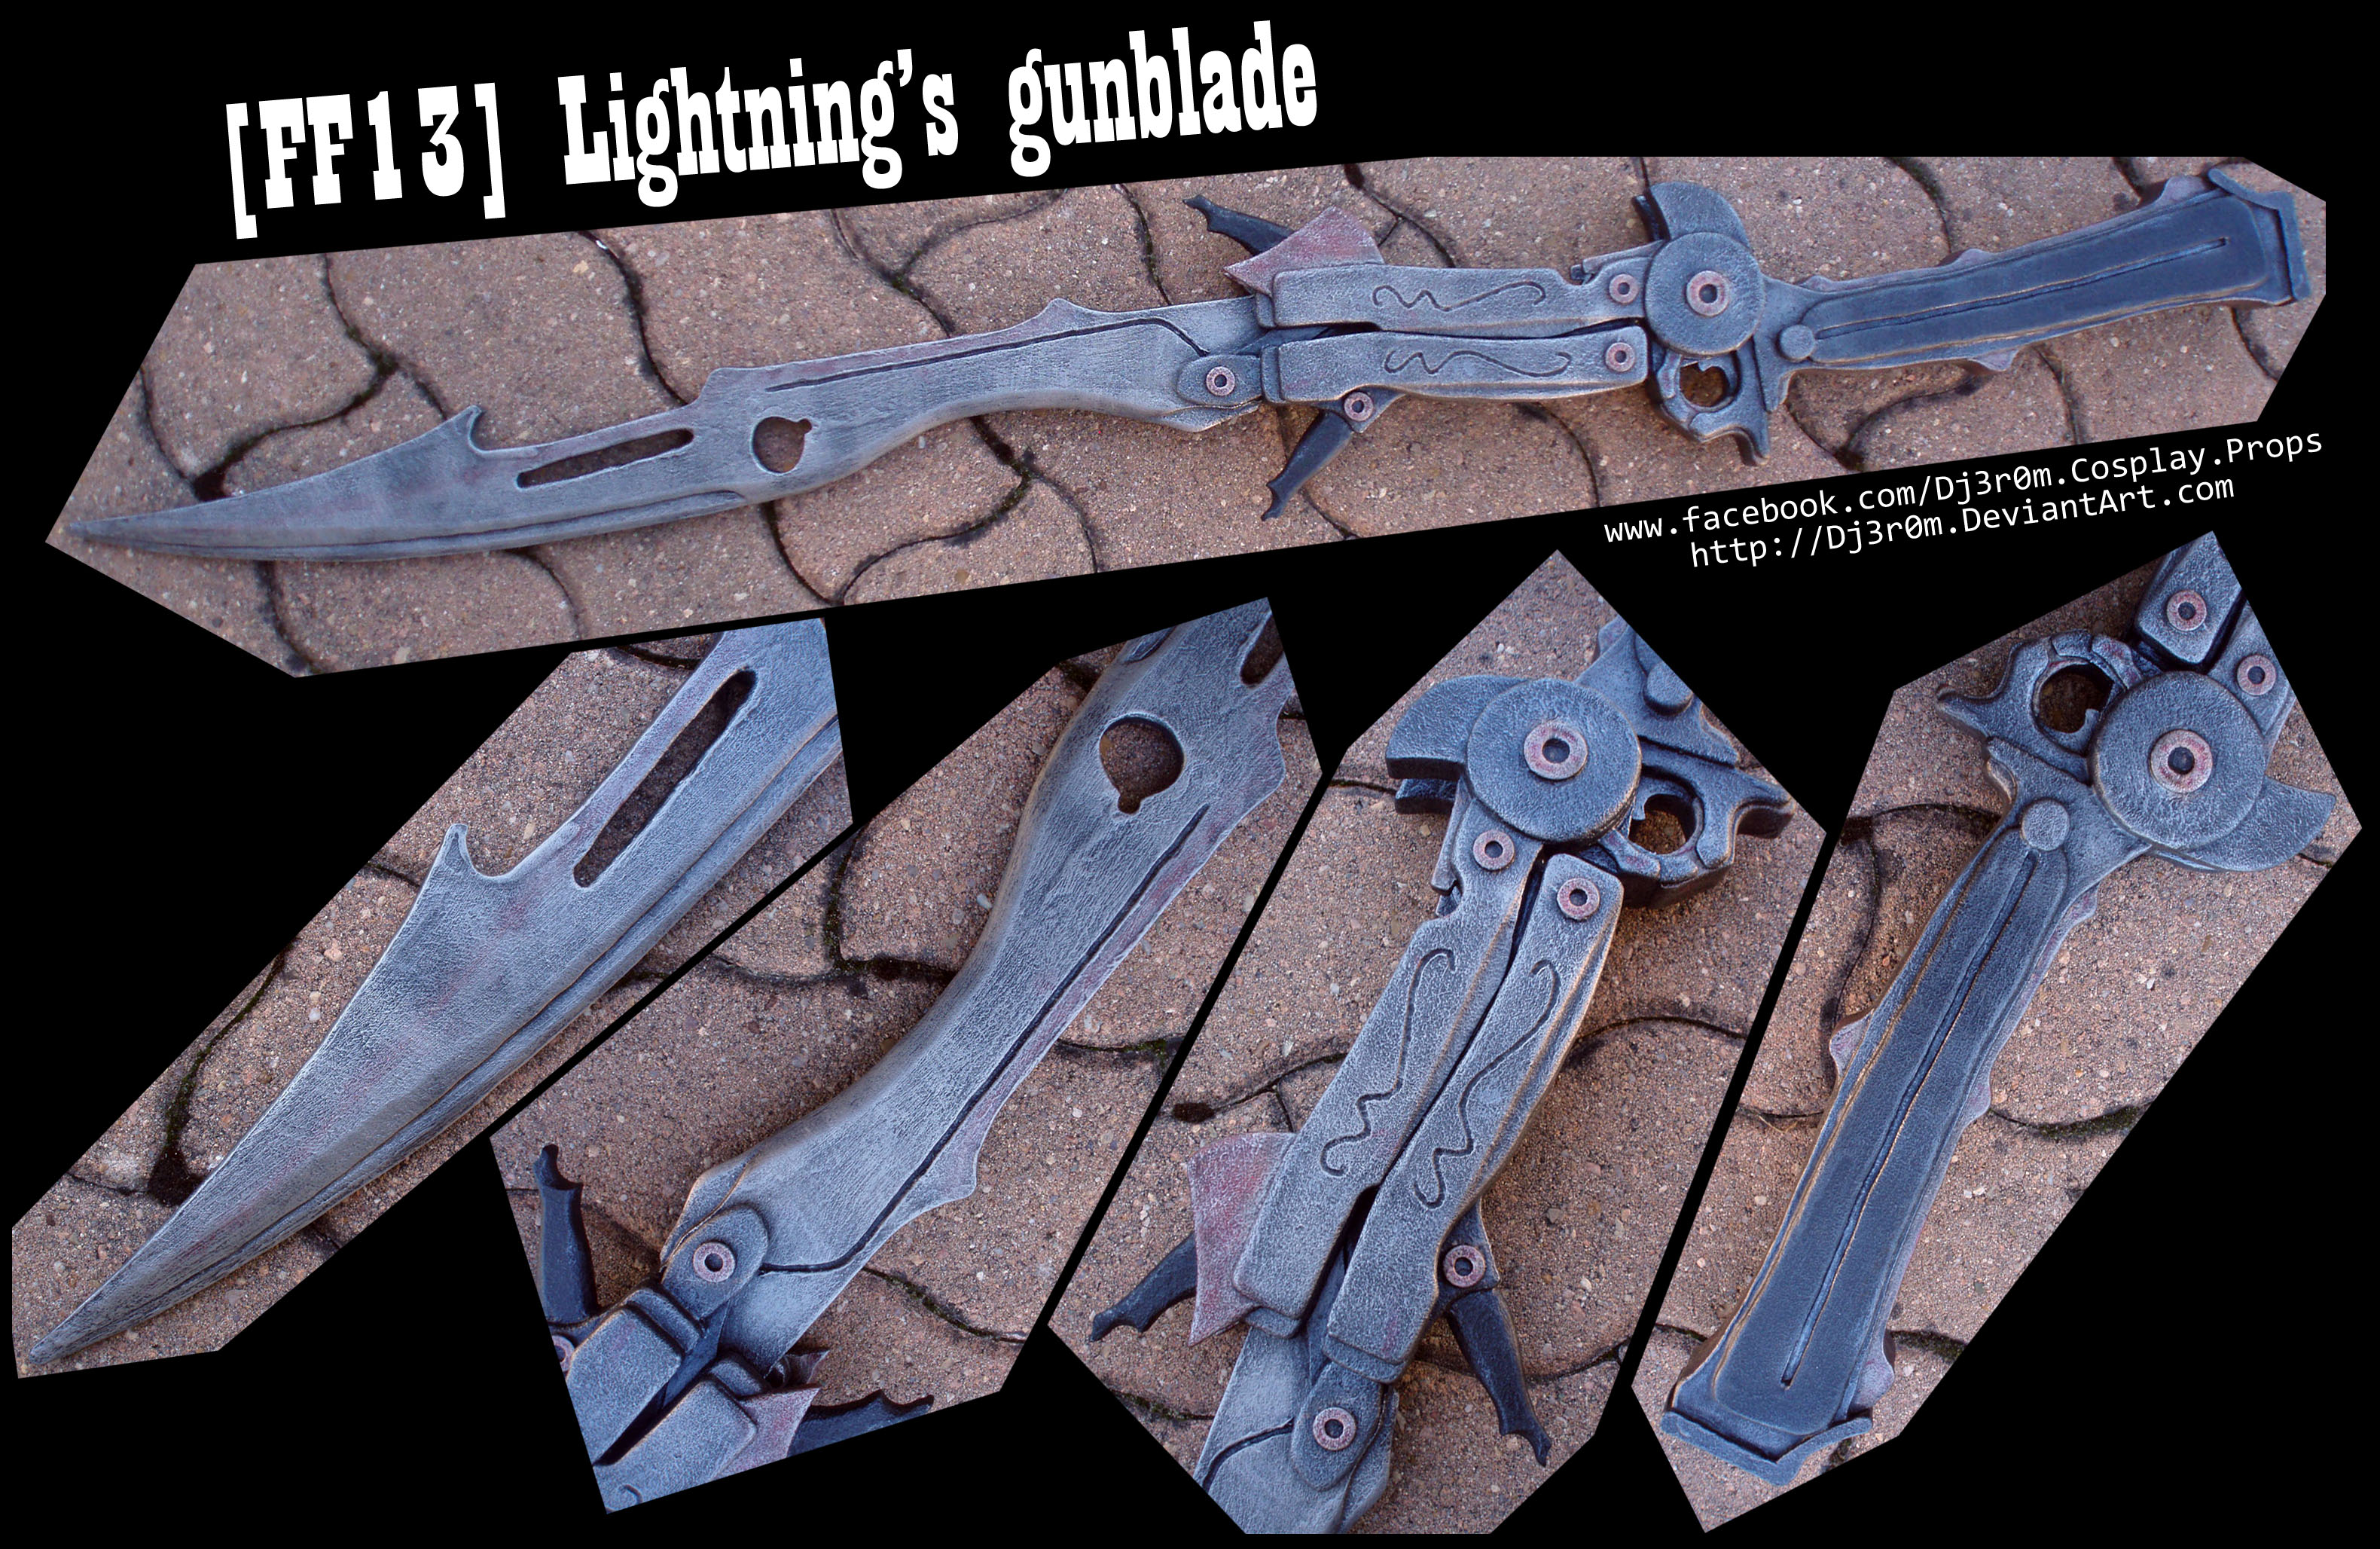 FF13] Lightning's Gunblade by Dj3r0m on DeviantArt